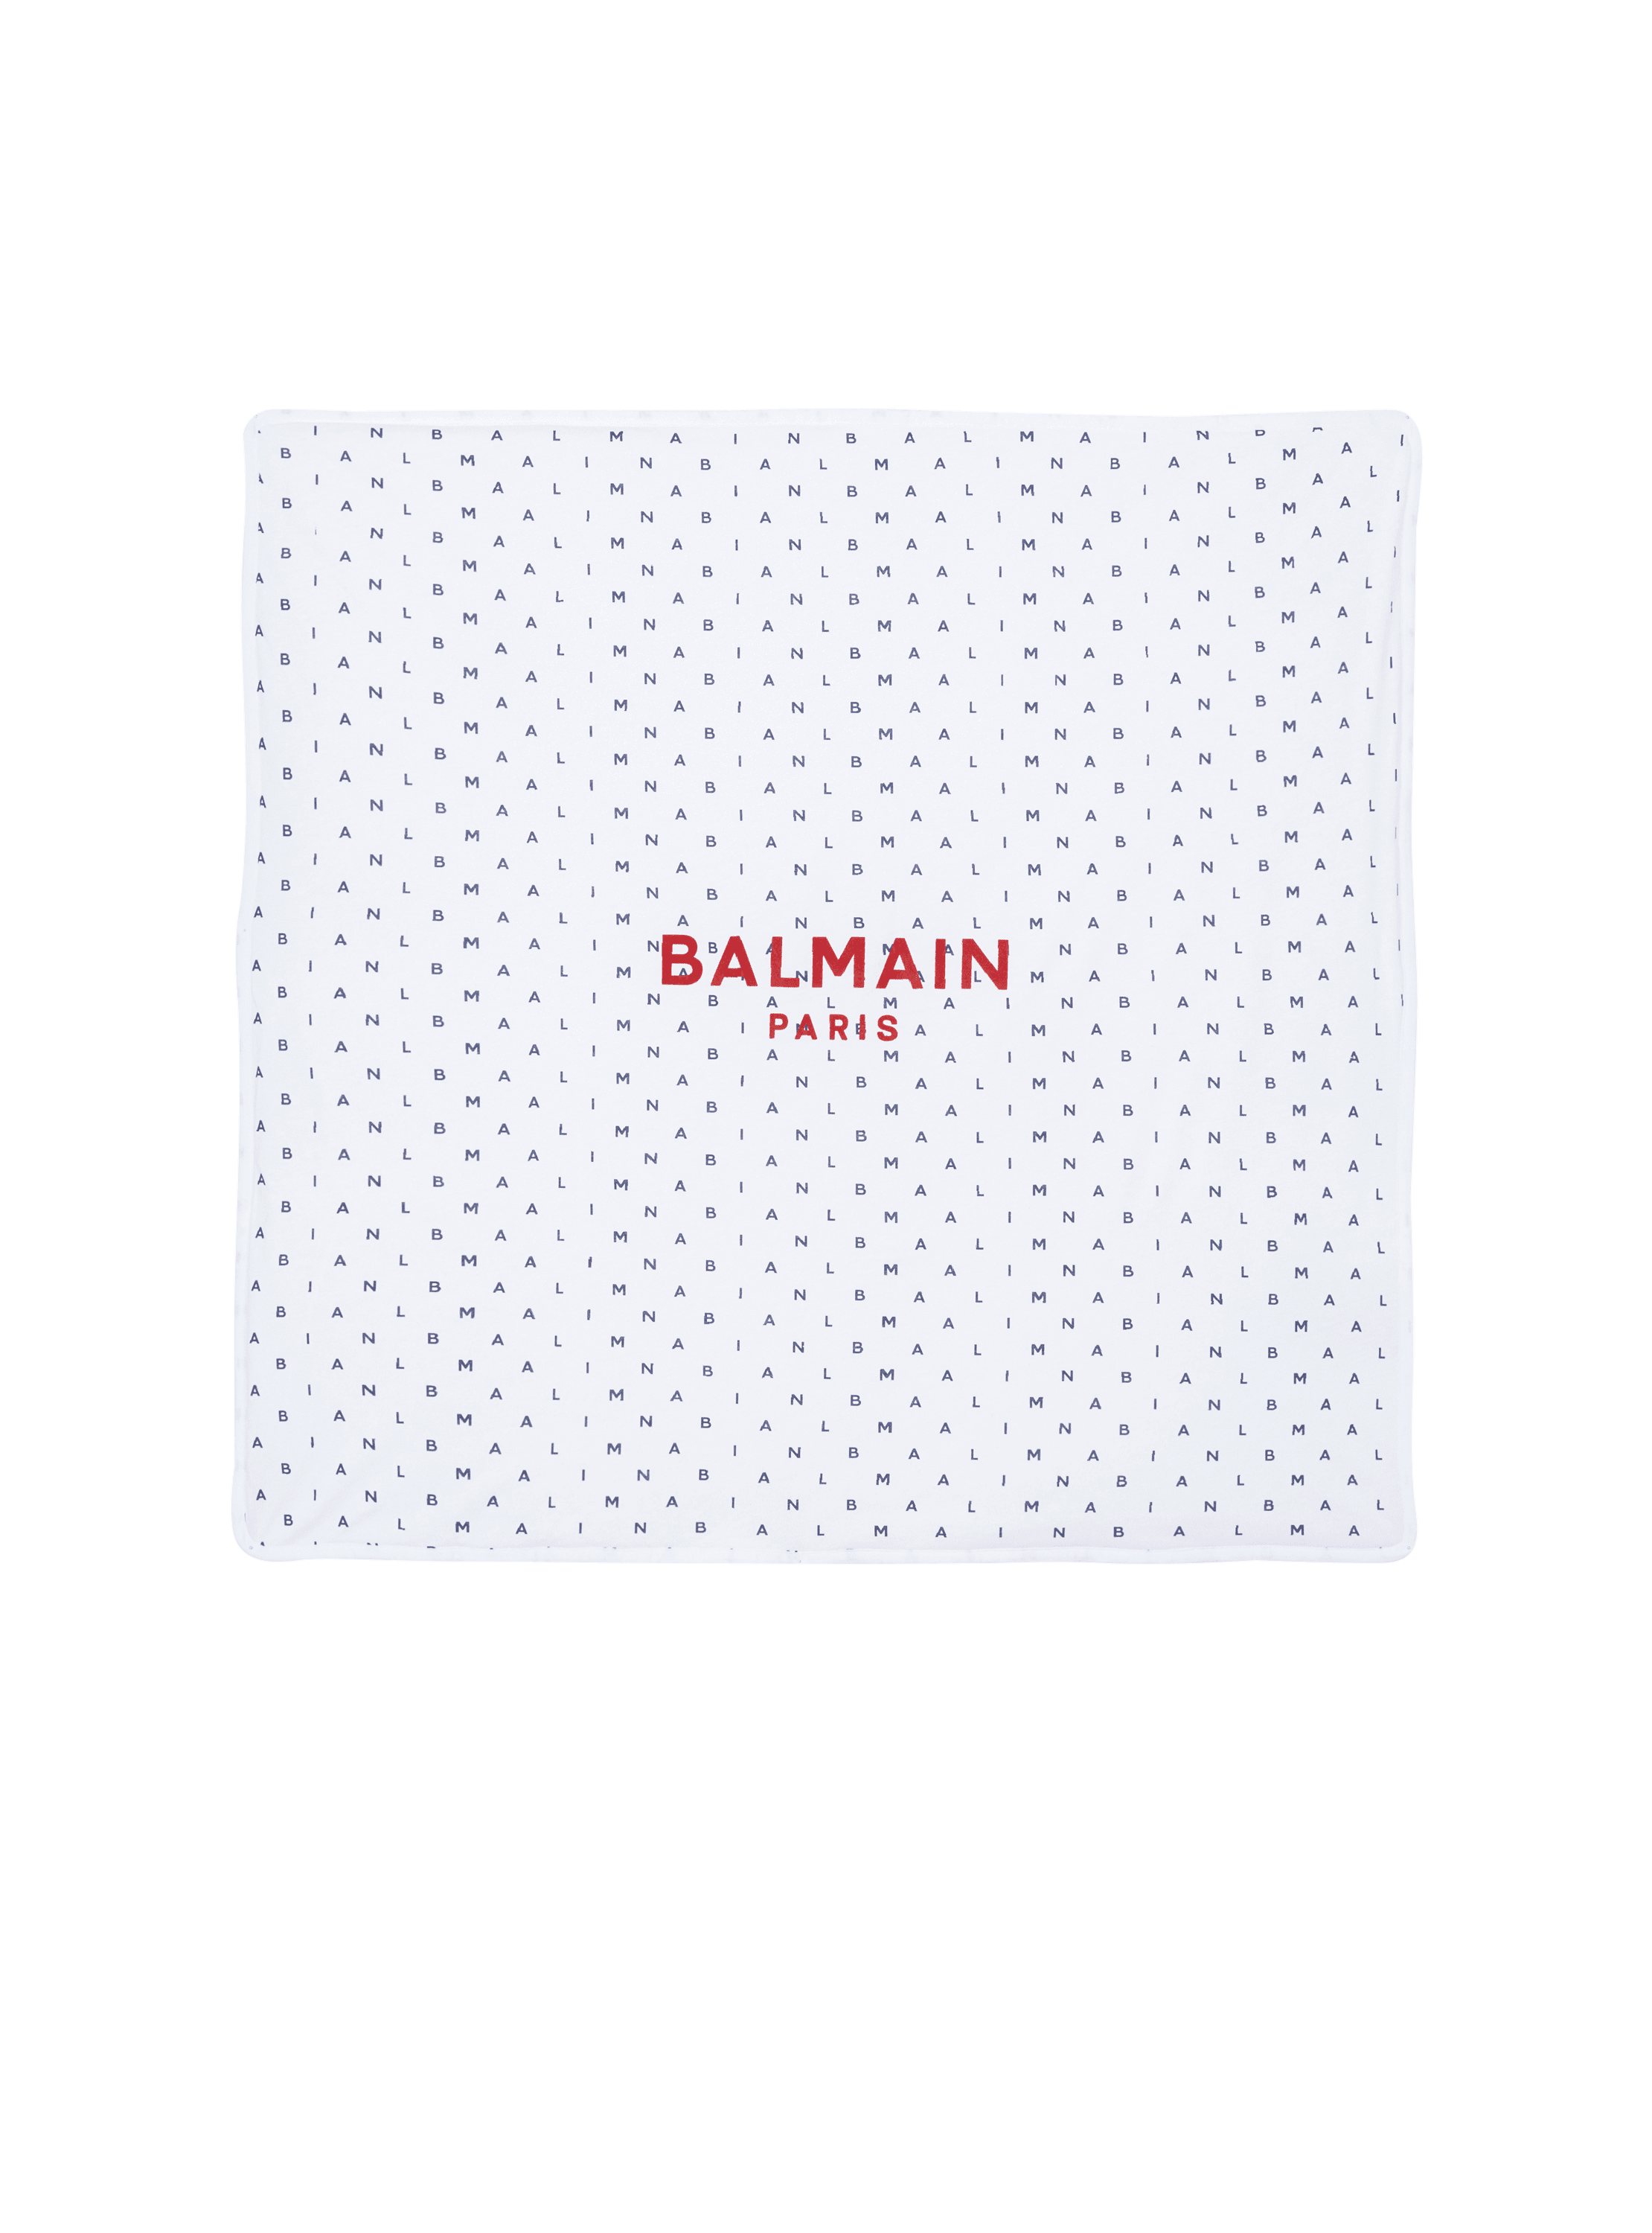 Balmain Paris blanket